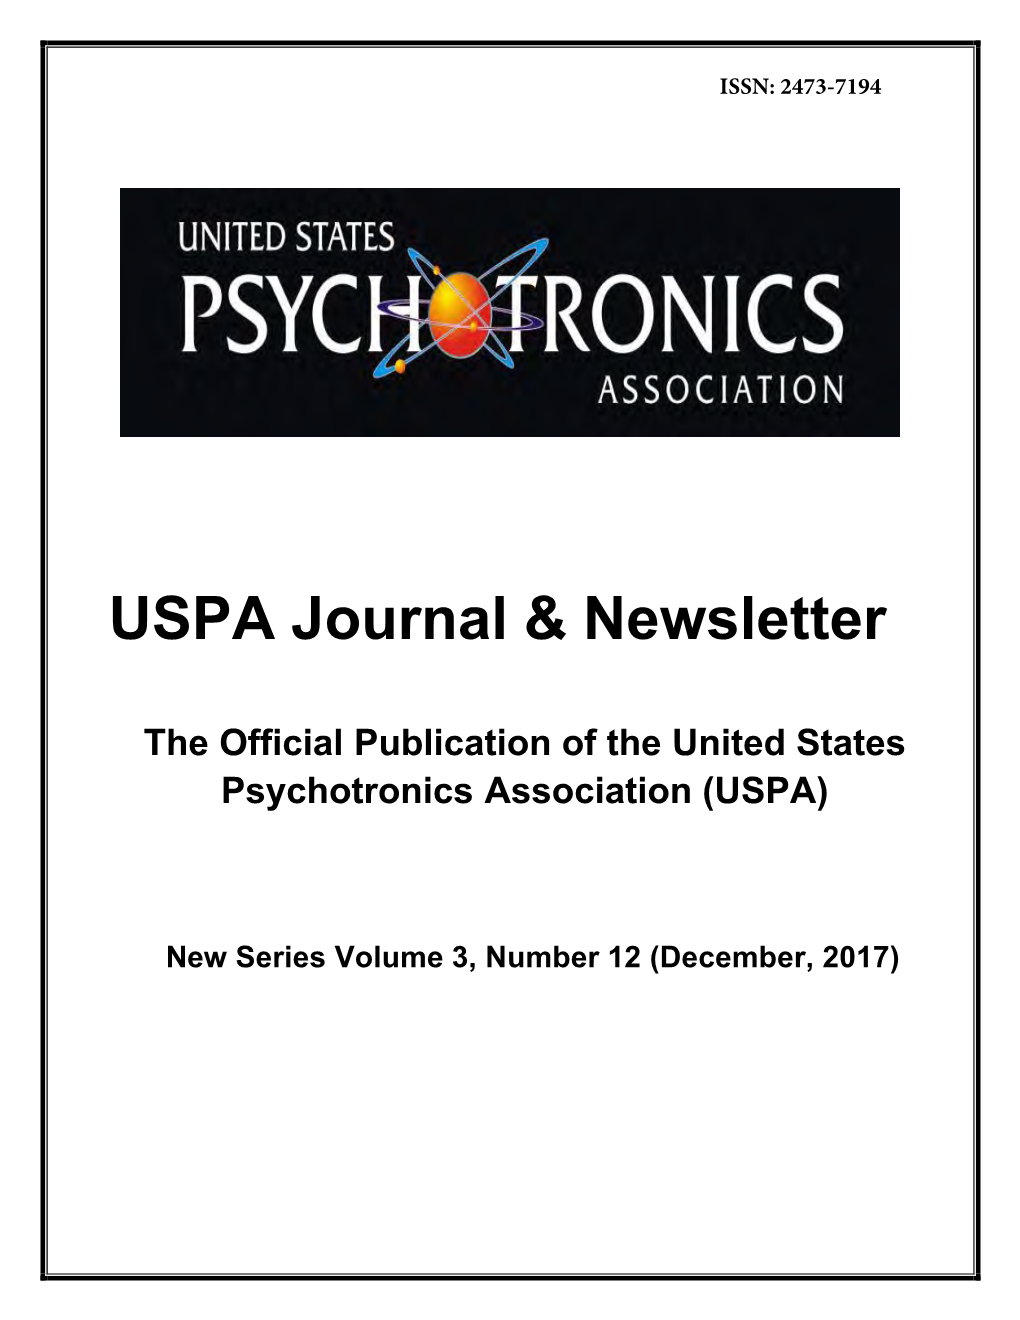 USPA Journal & Newsletter